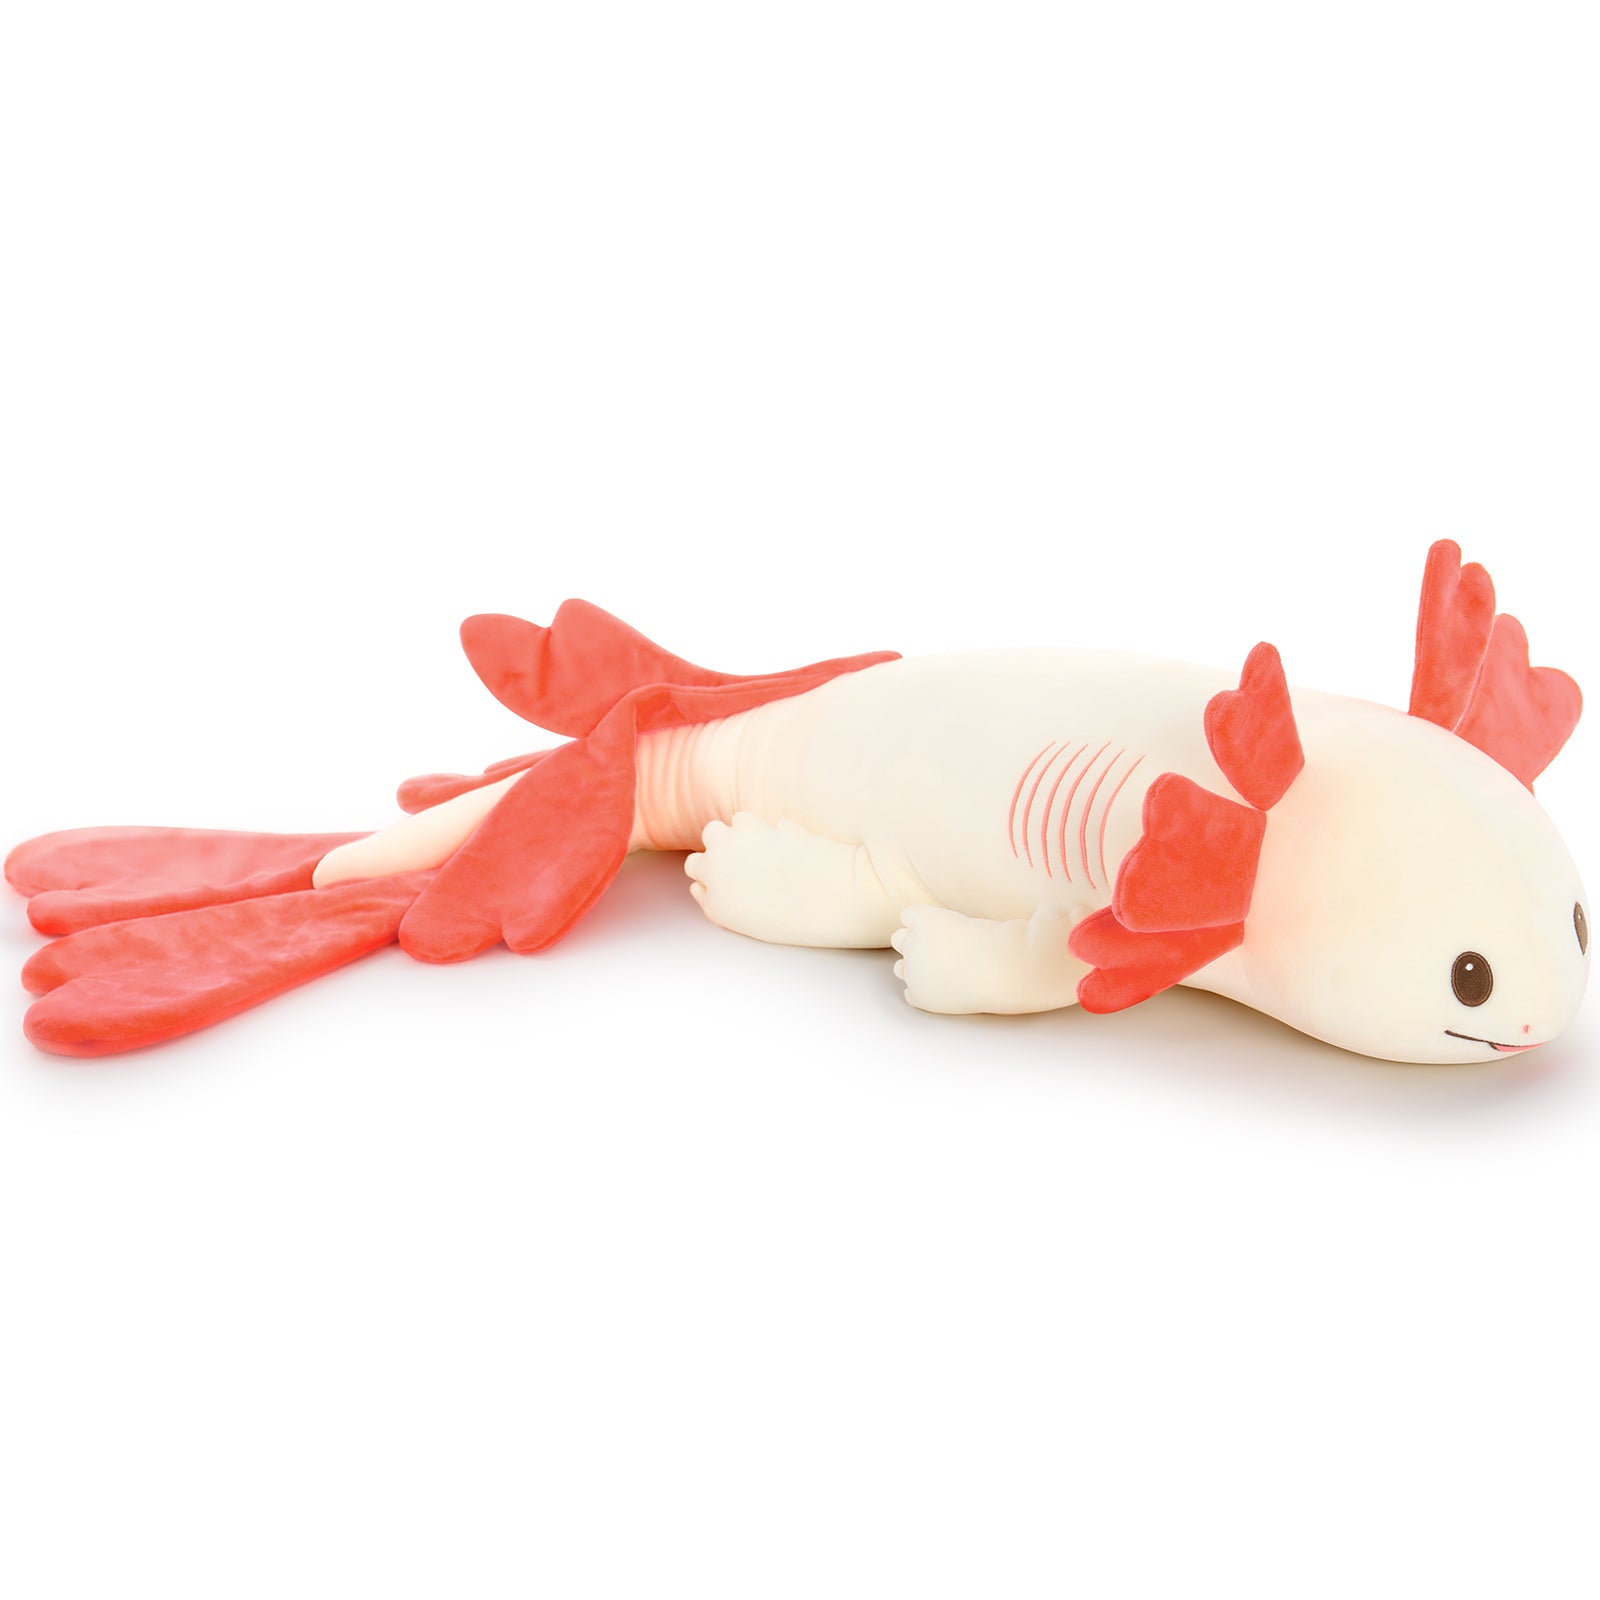 Axolotl Plush Toy Salamander Long Throw Pillow, 43 Inches